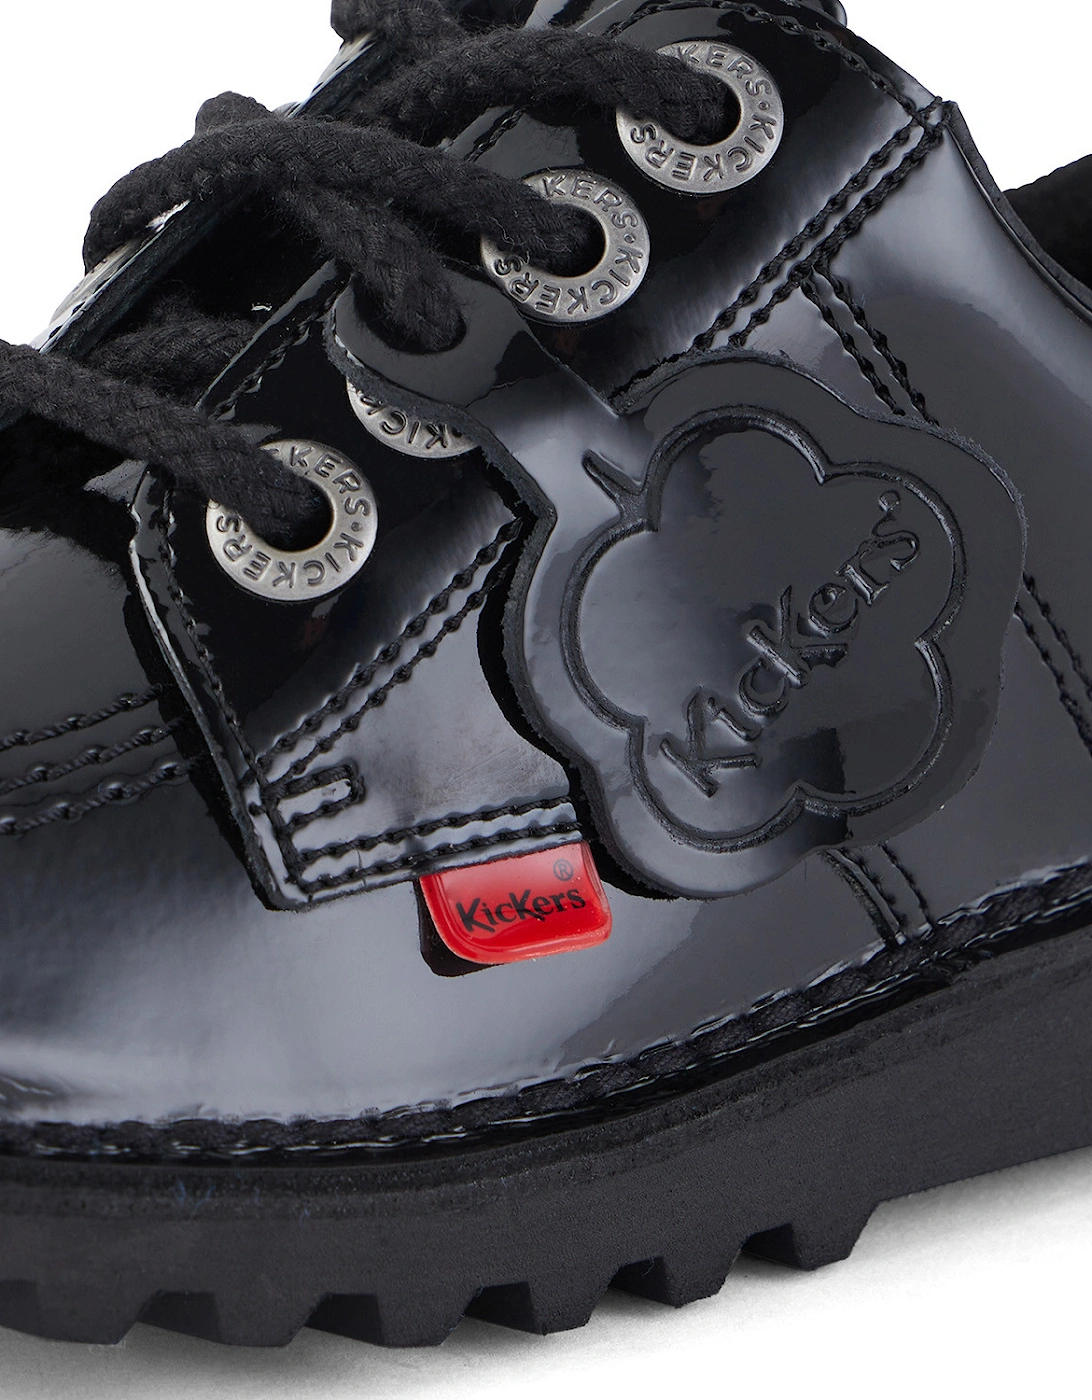 Juniors Kick Lo Classic Patent Shoes (Black)